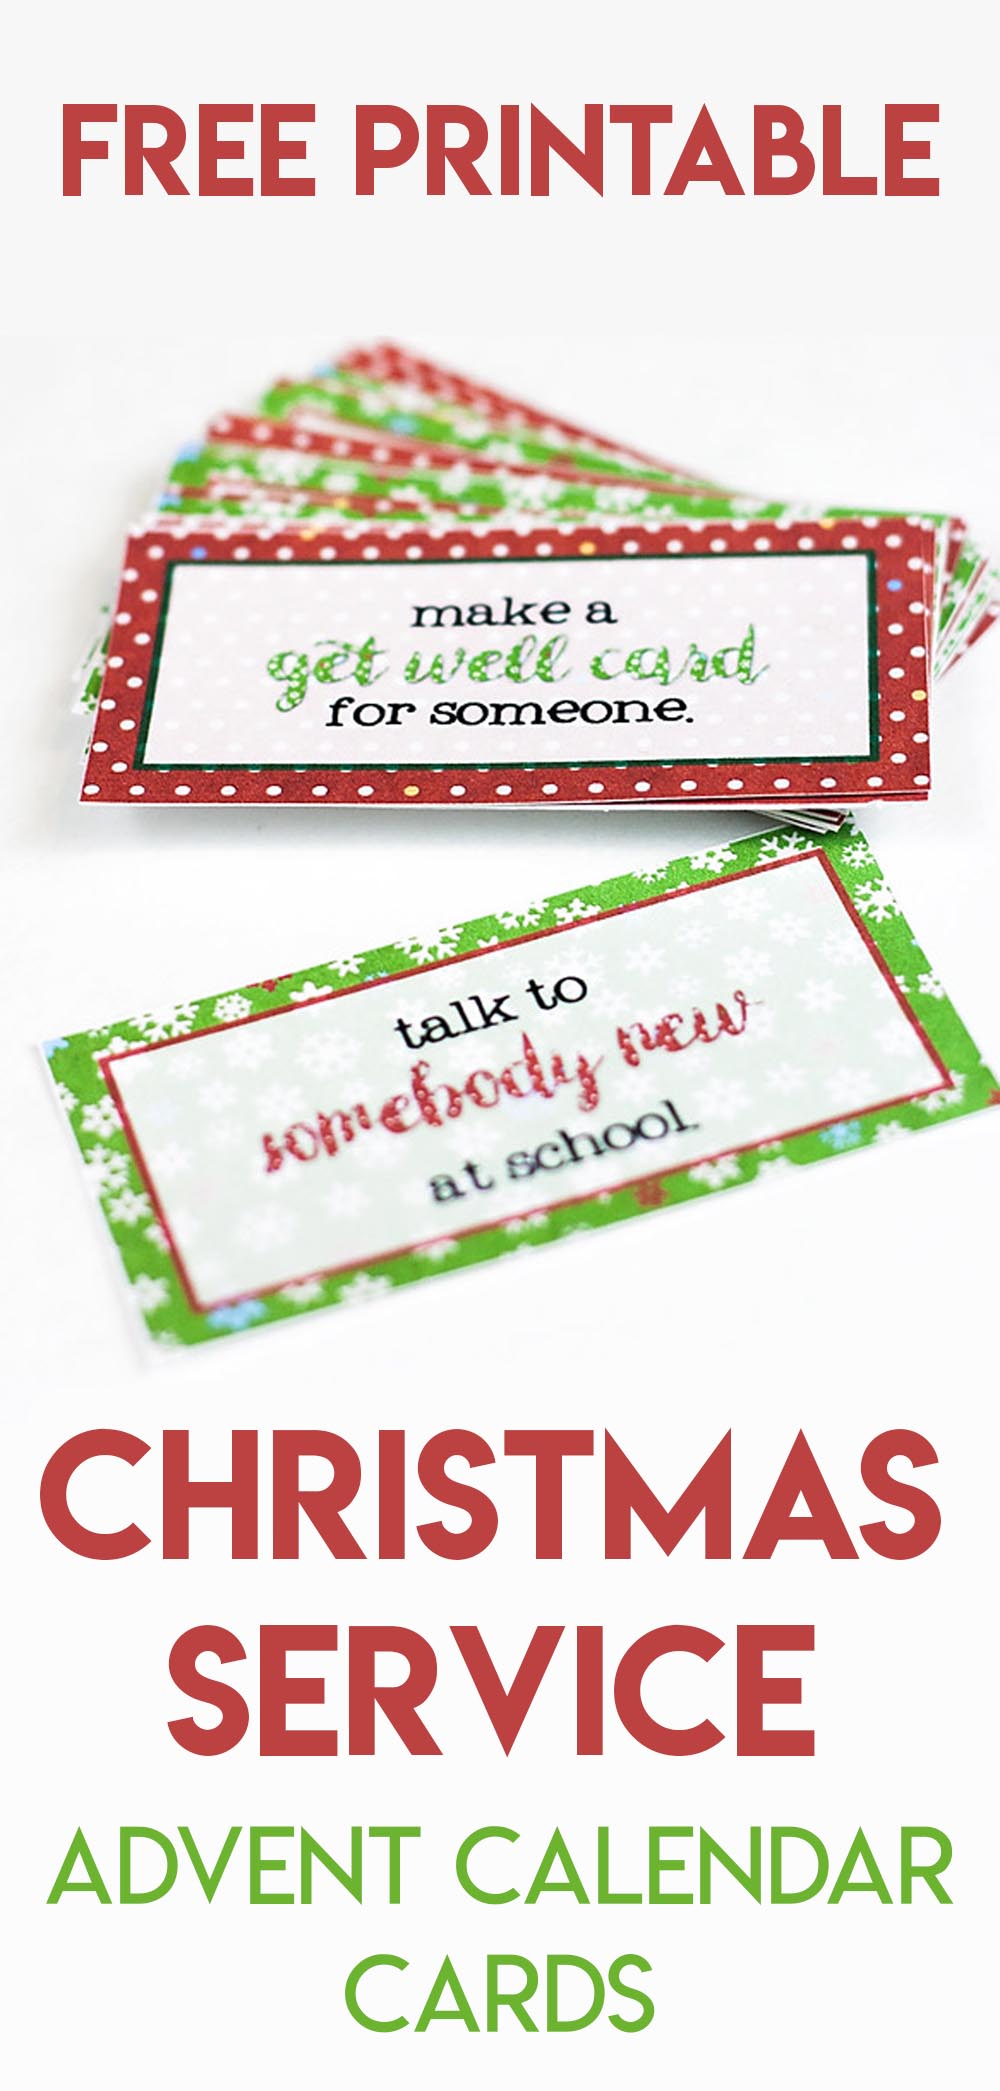 Free Printable Christmas Service Advent Cards via @lara_neves